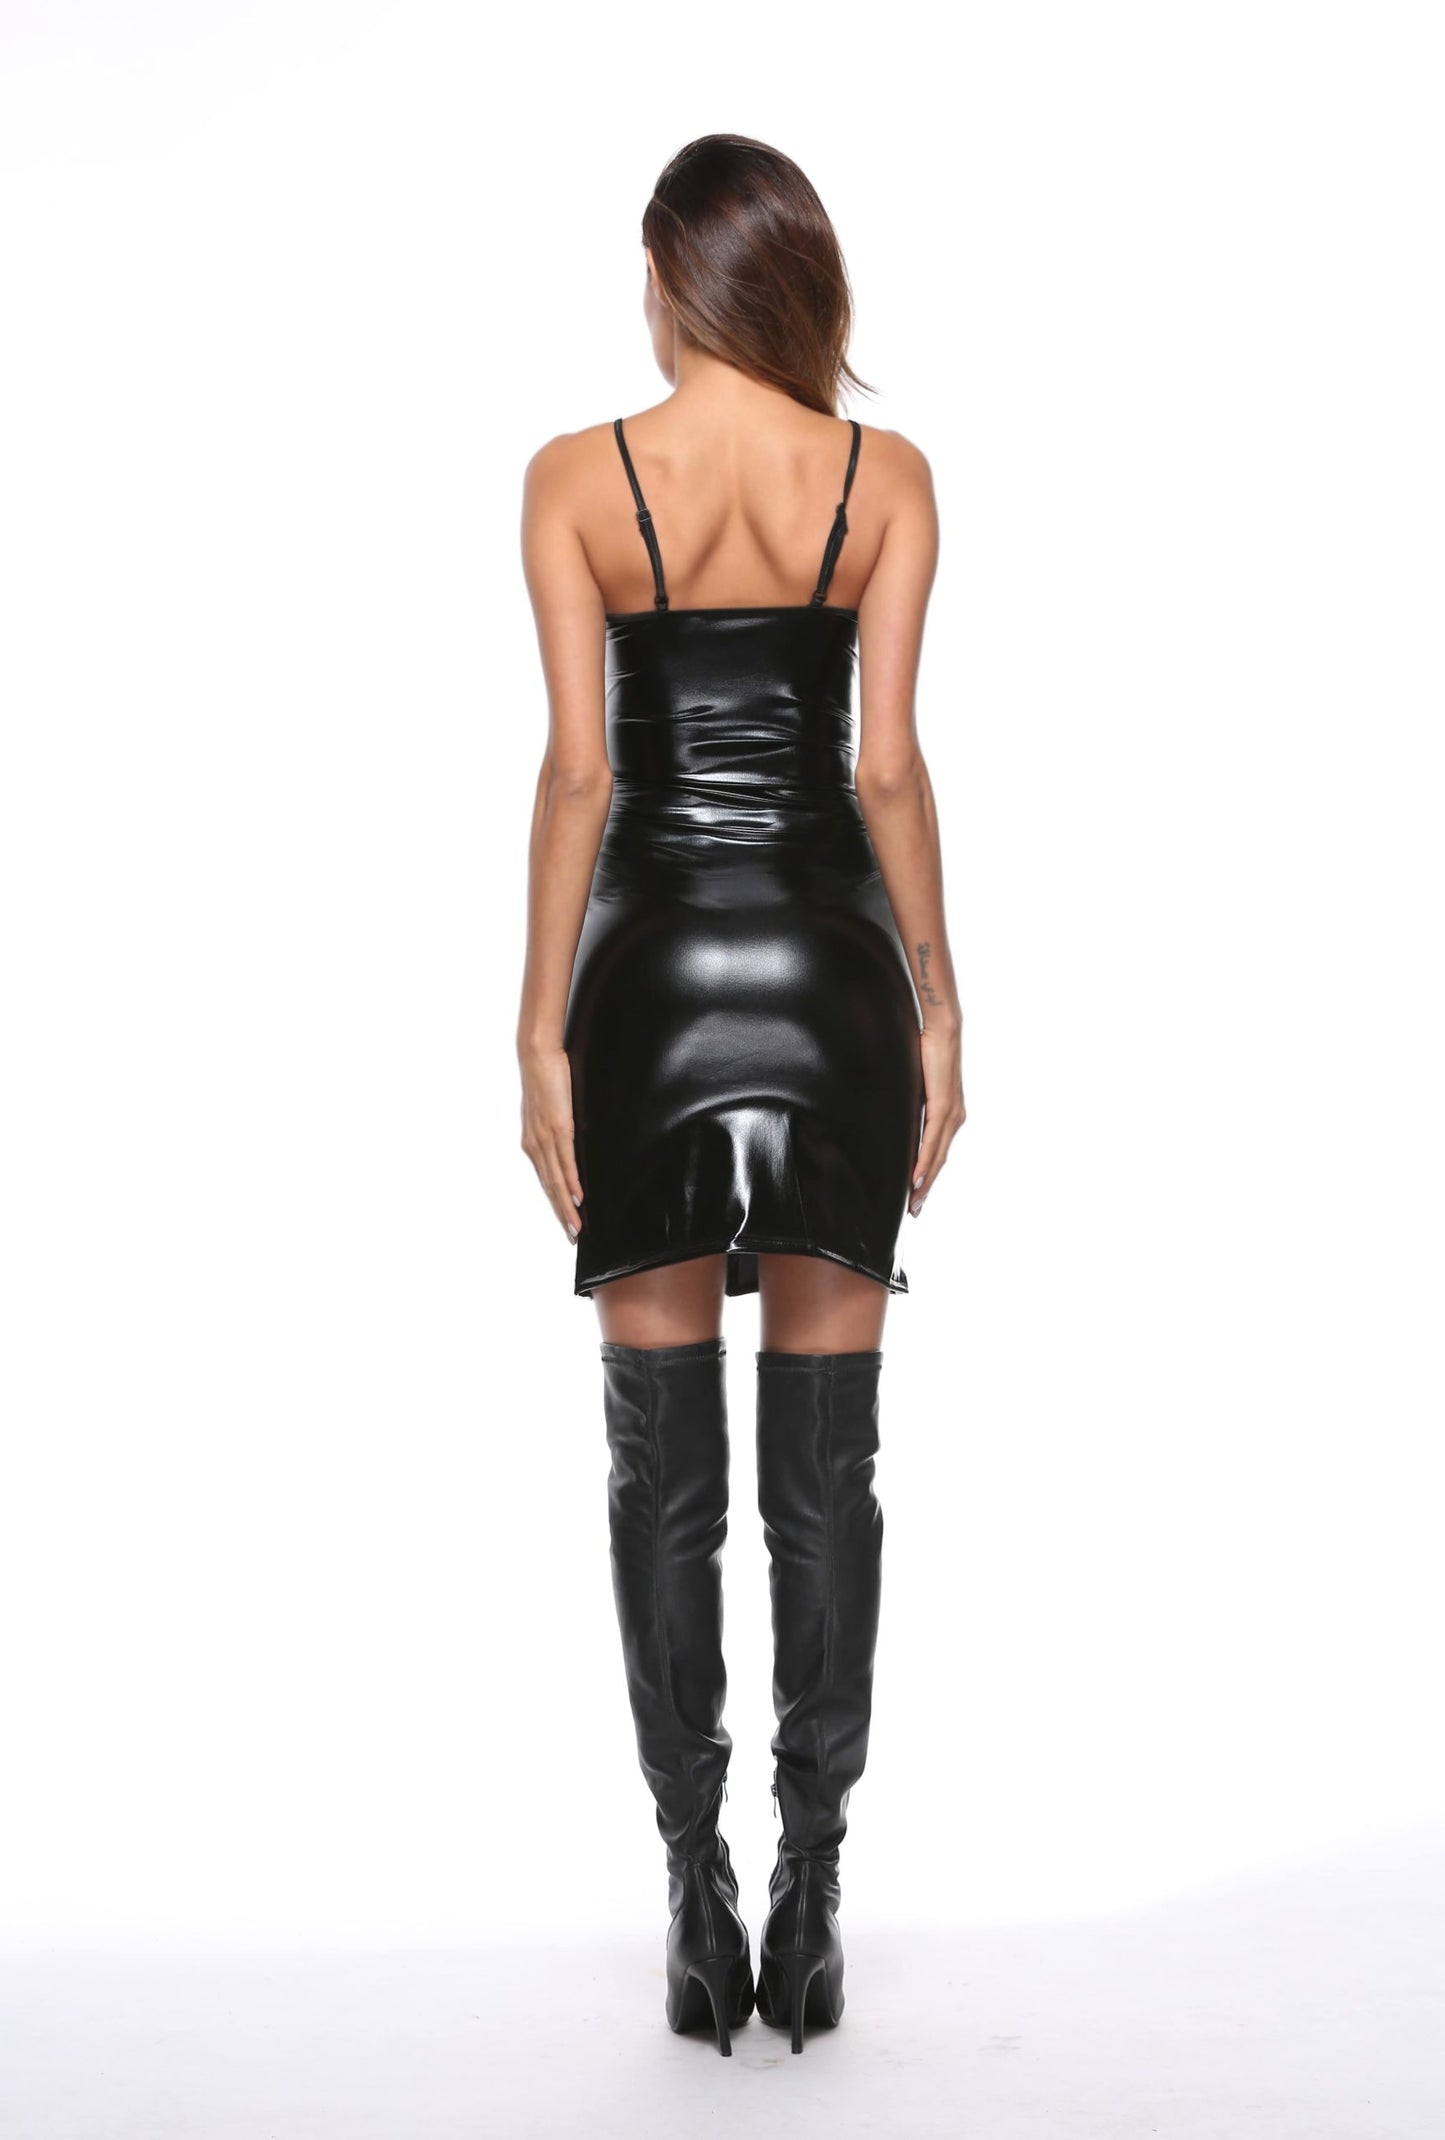 Body Pleasure - TL104 - Wetlook TIght Dress - One Size Fits Most